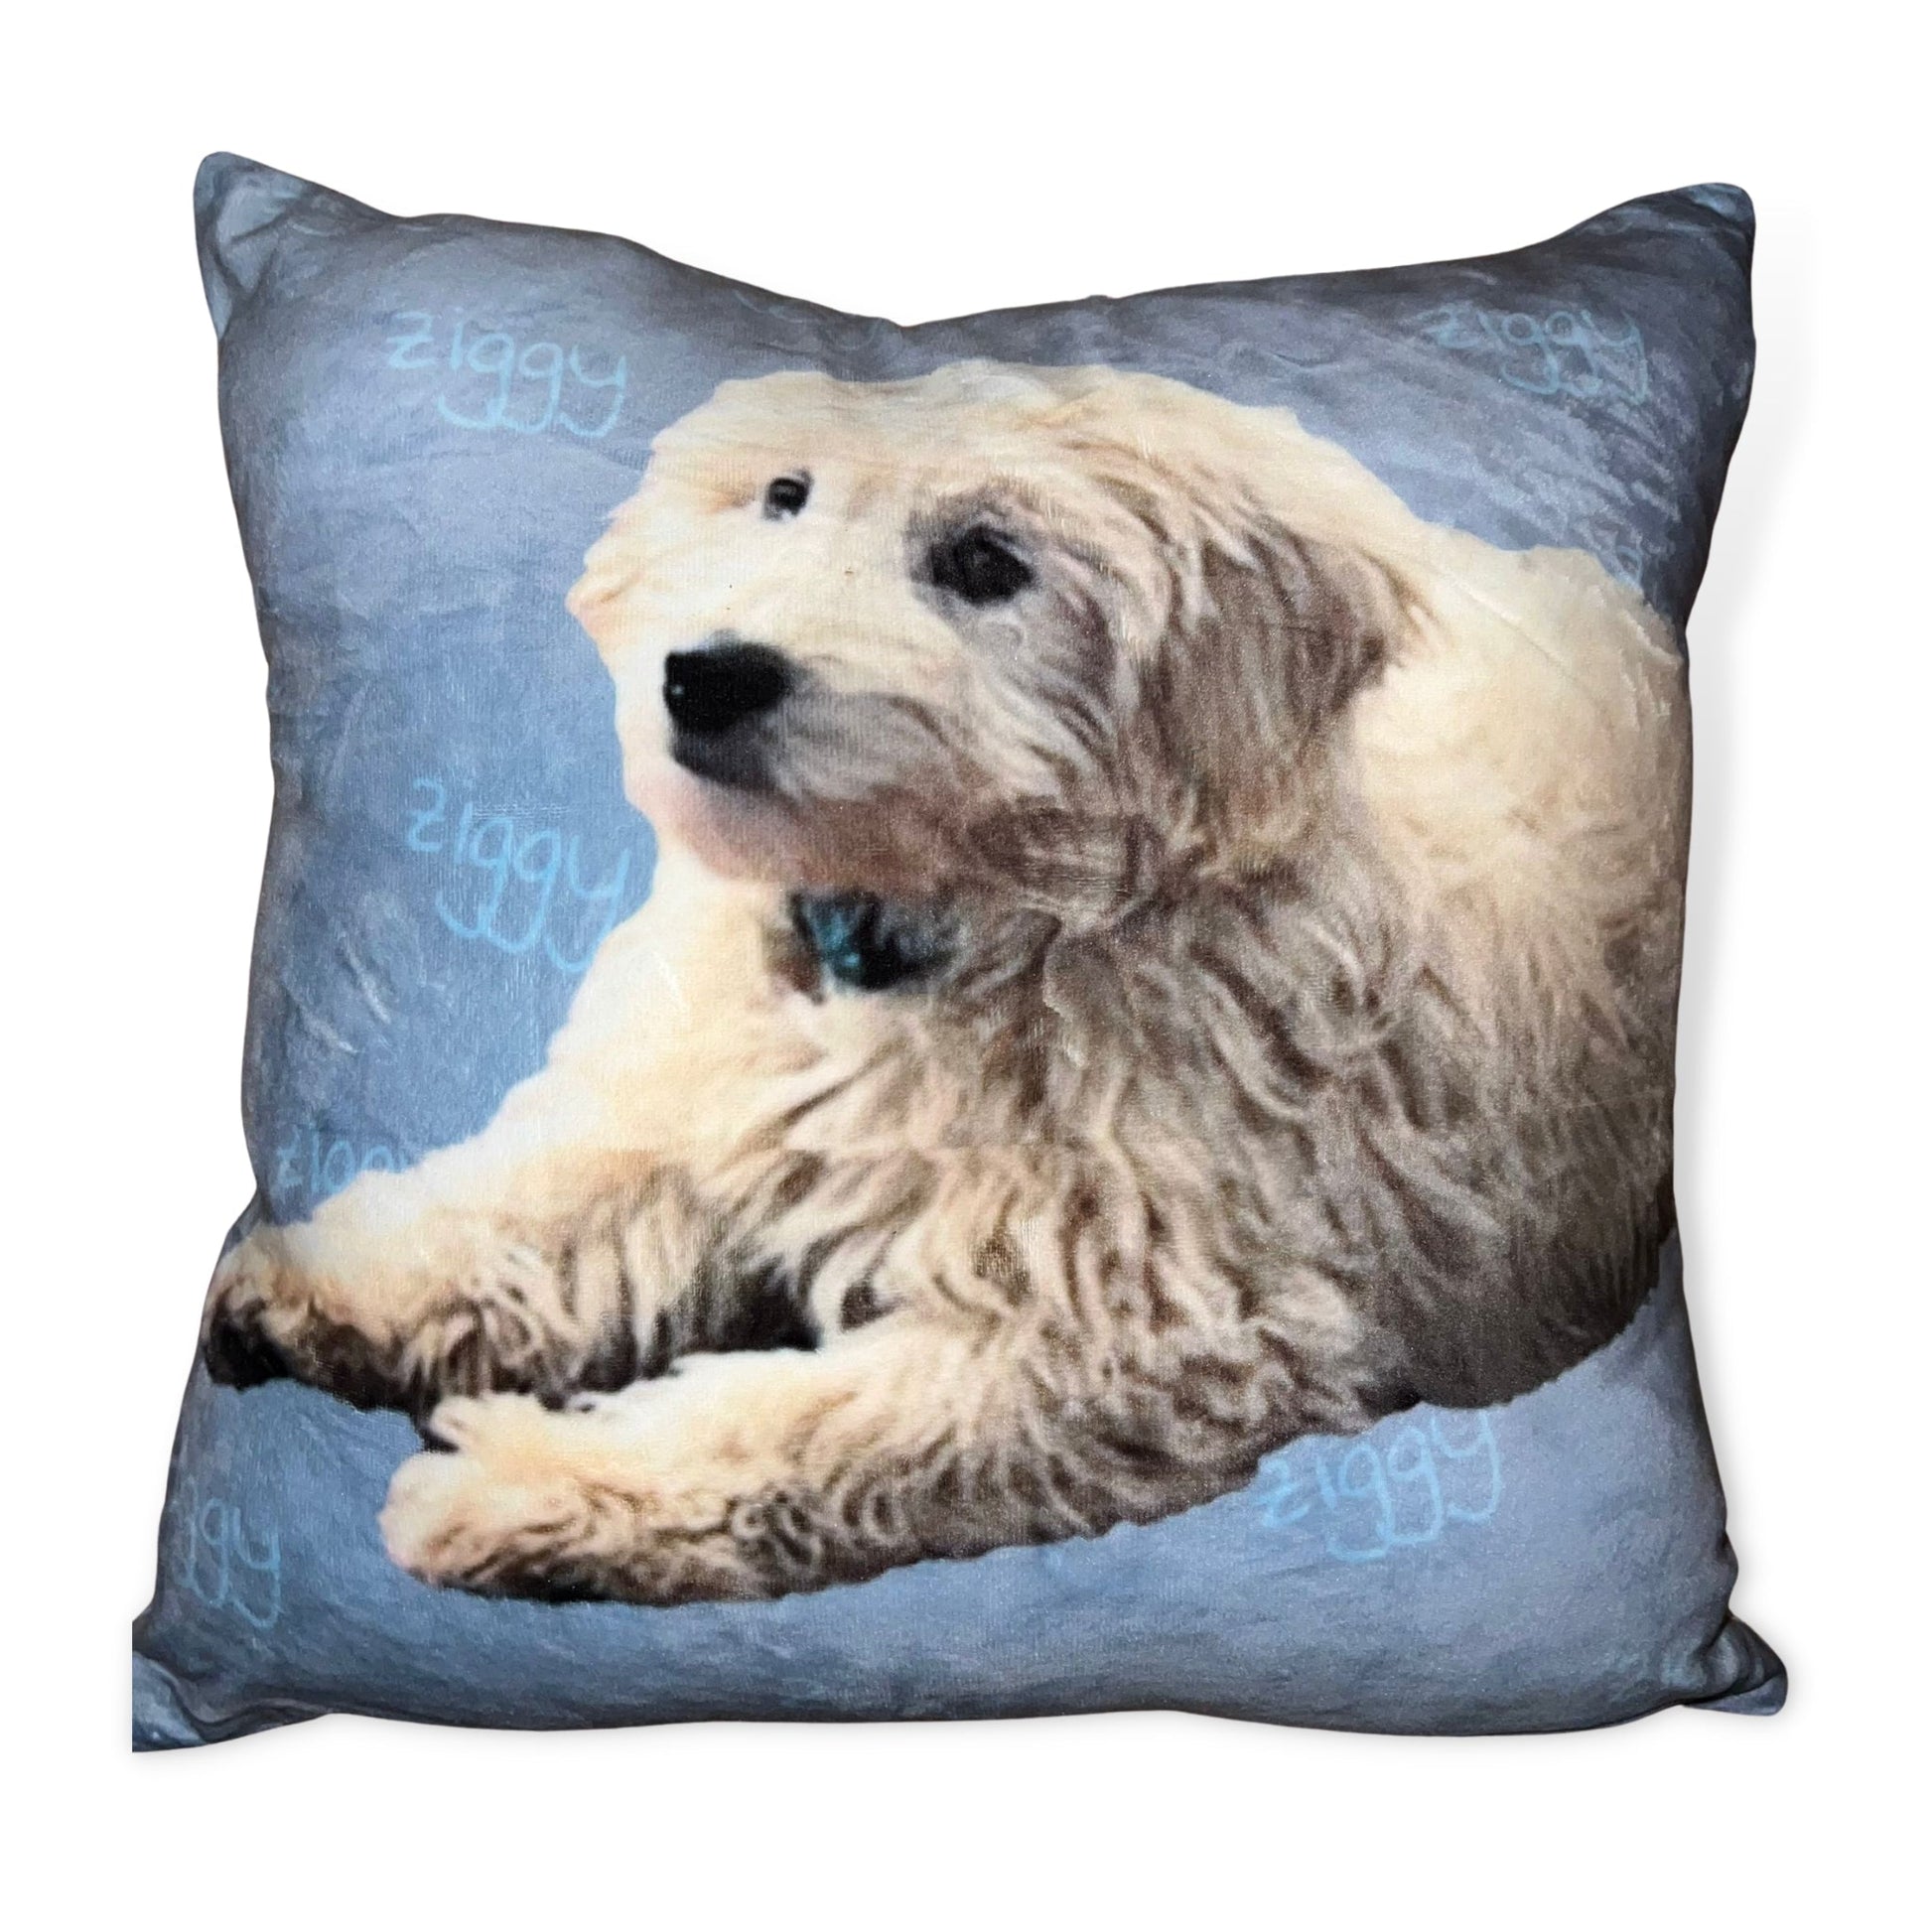 Custom Dog Throw Pillow - a Spirit Animal - Dog Pillow Cases $30-$60 Animal Prints Custom